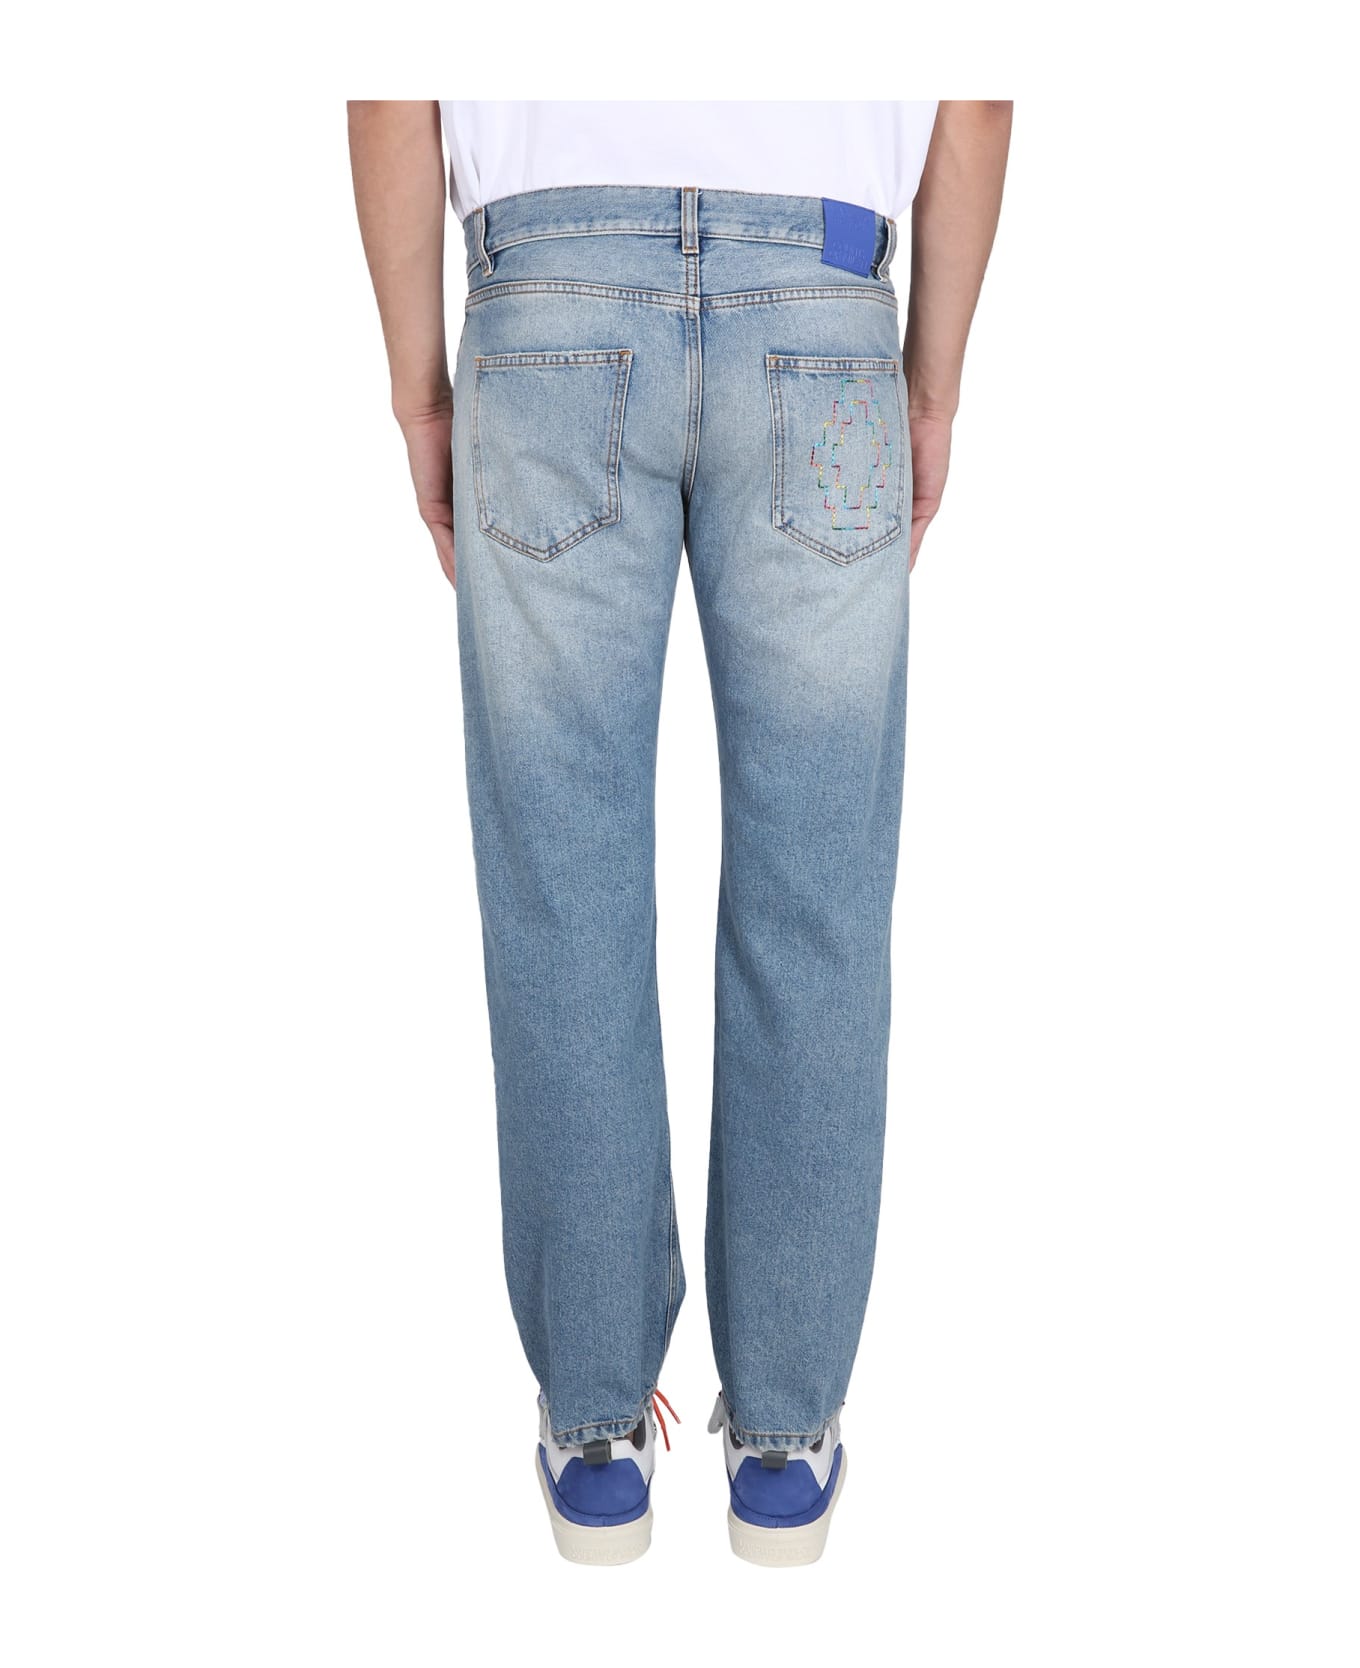 Marcelo Burlon Slim Fit Jeans - BLU